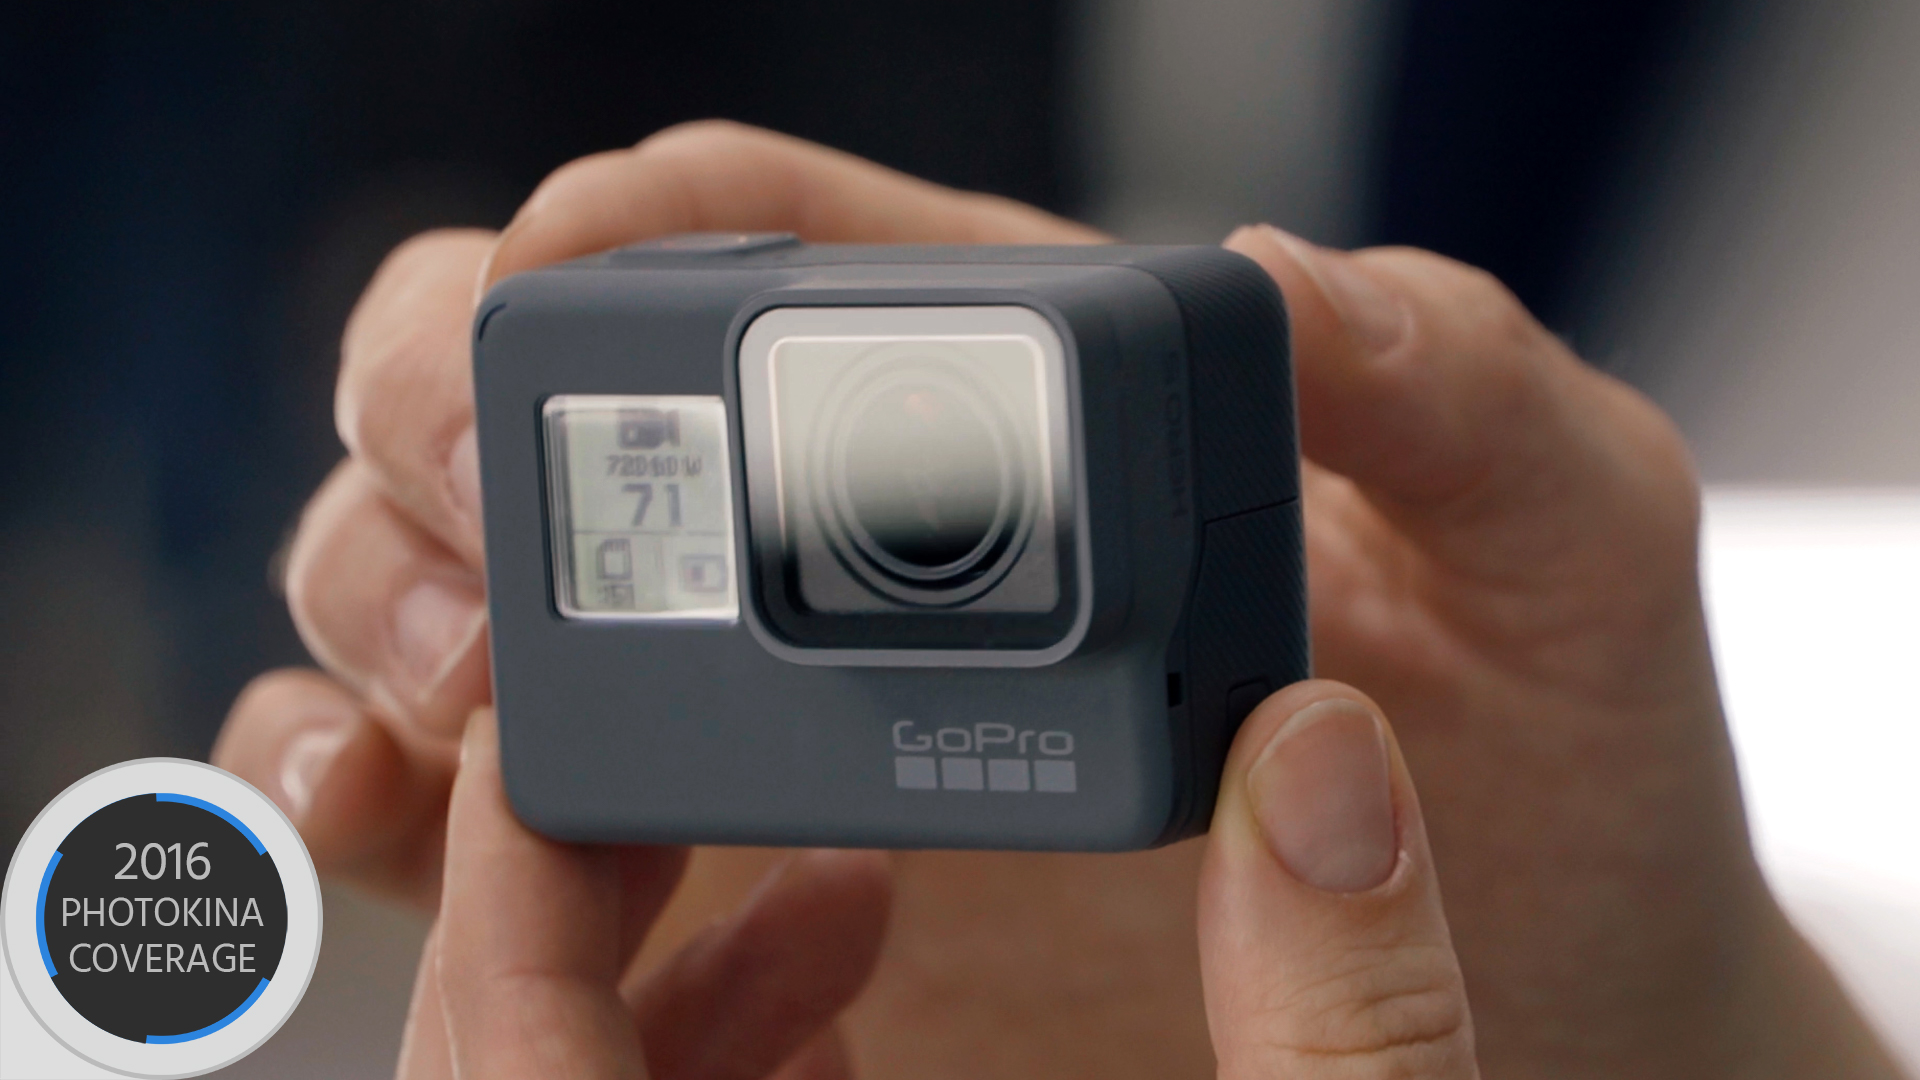 GoPro Hero5 Black － スタビライザーや音声コントトールなどを装備